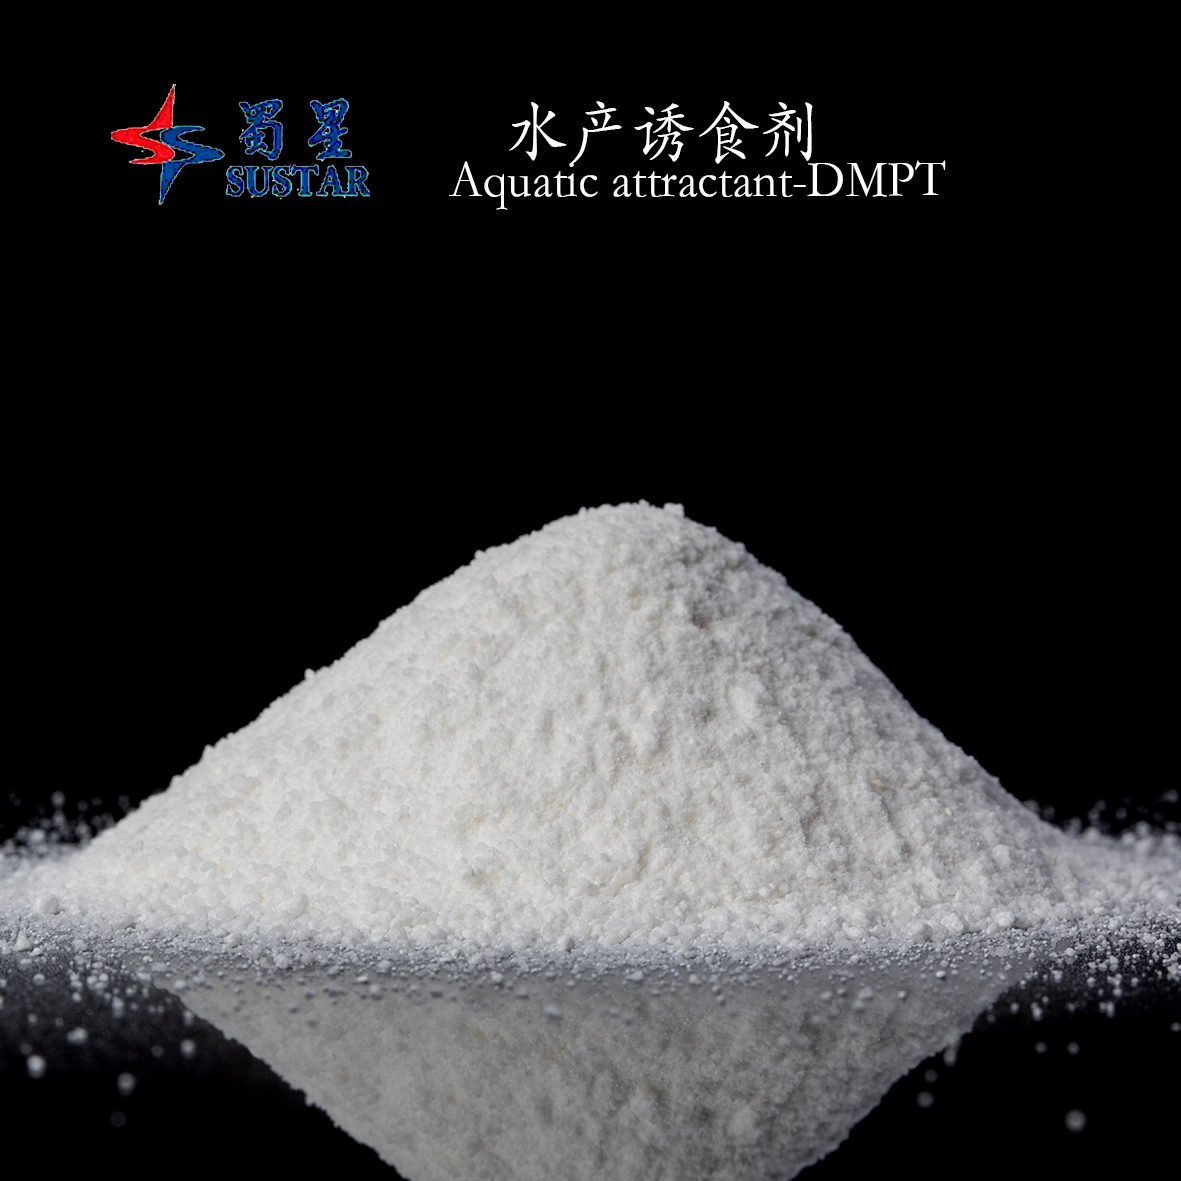 DMPT Dimethyl-Beta-Propiothetin Aquapro Aquatic Attractant (2-Carboxyethyl) dimethylsulfonium chlorure s,s-Dimethyl-β-propionic acid thetine White Crystalline Powder